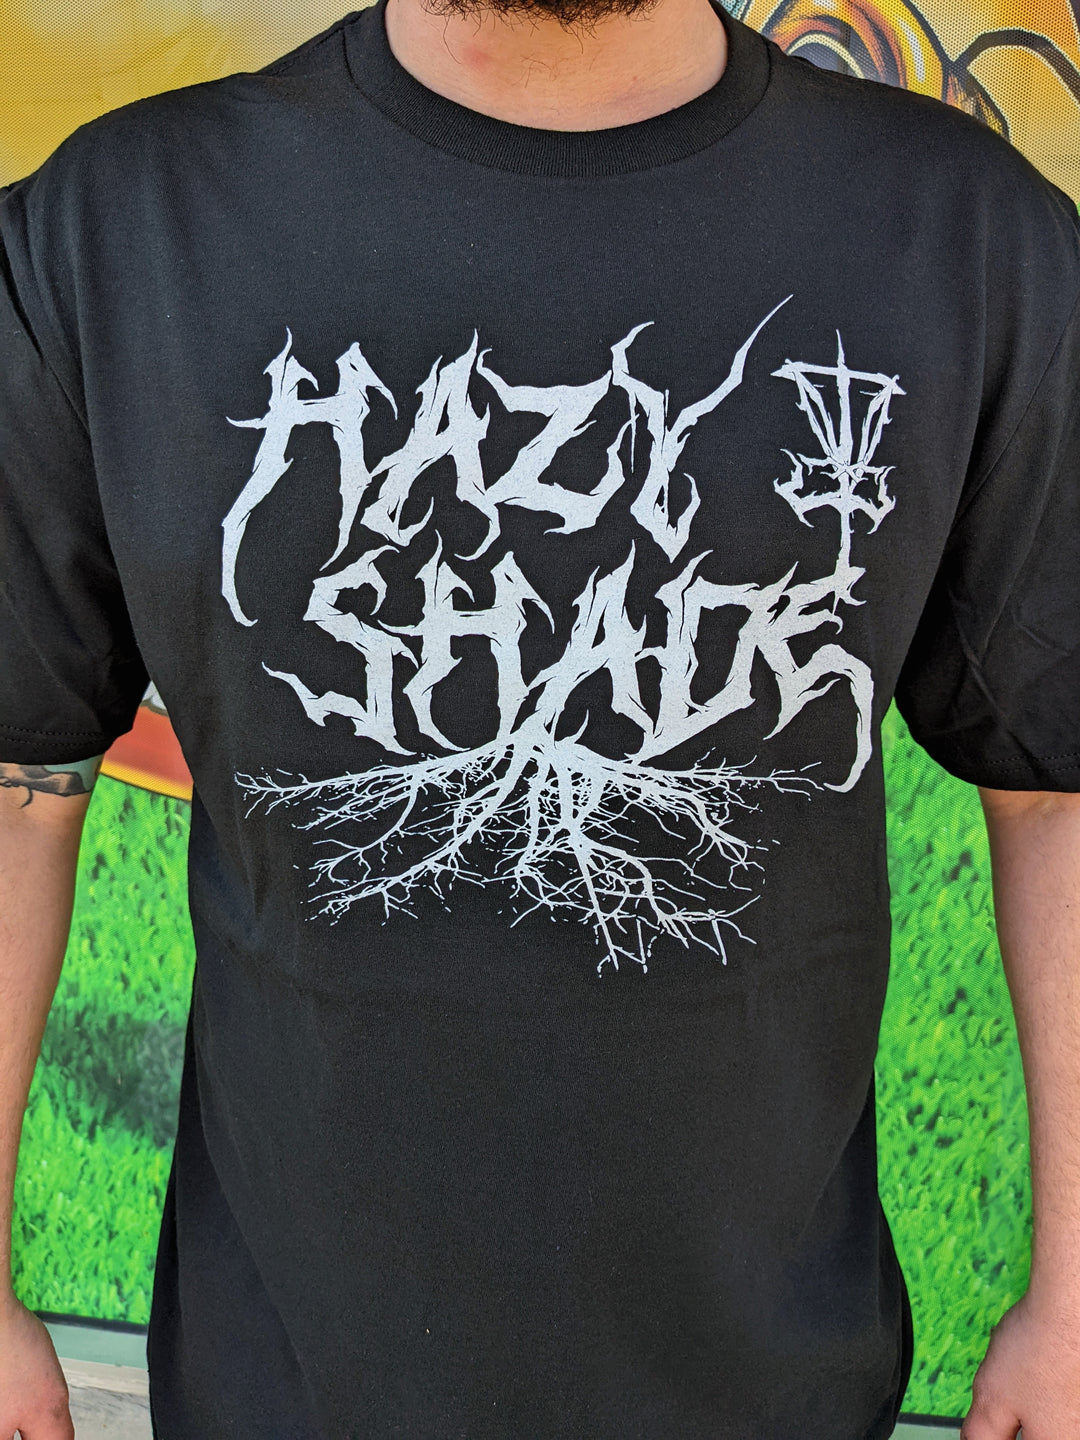 Hazy Shade Metal Tee Shirt Small